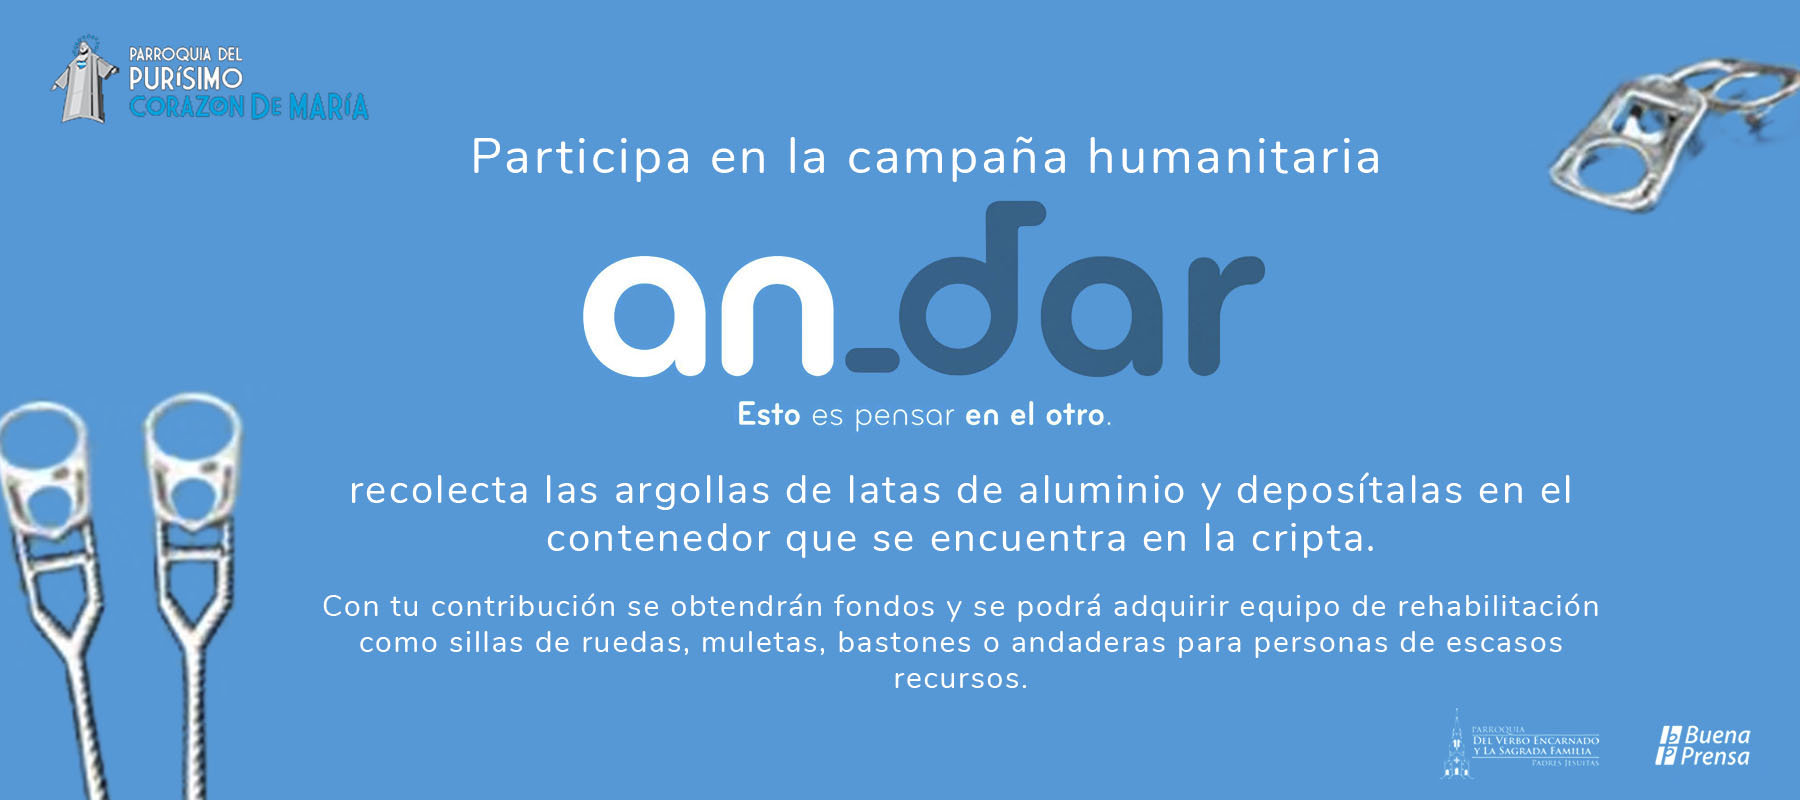 Campaña an_dar